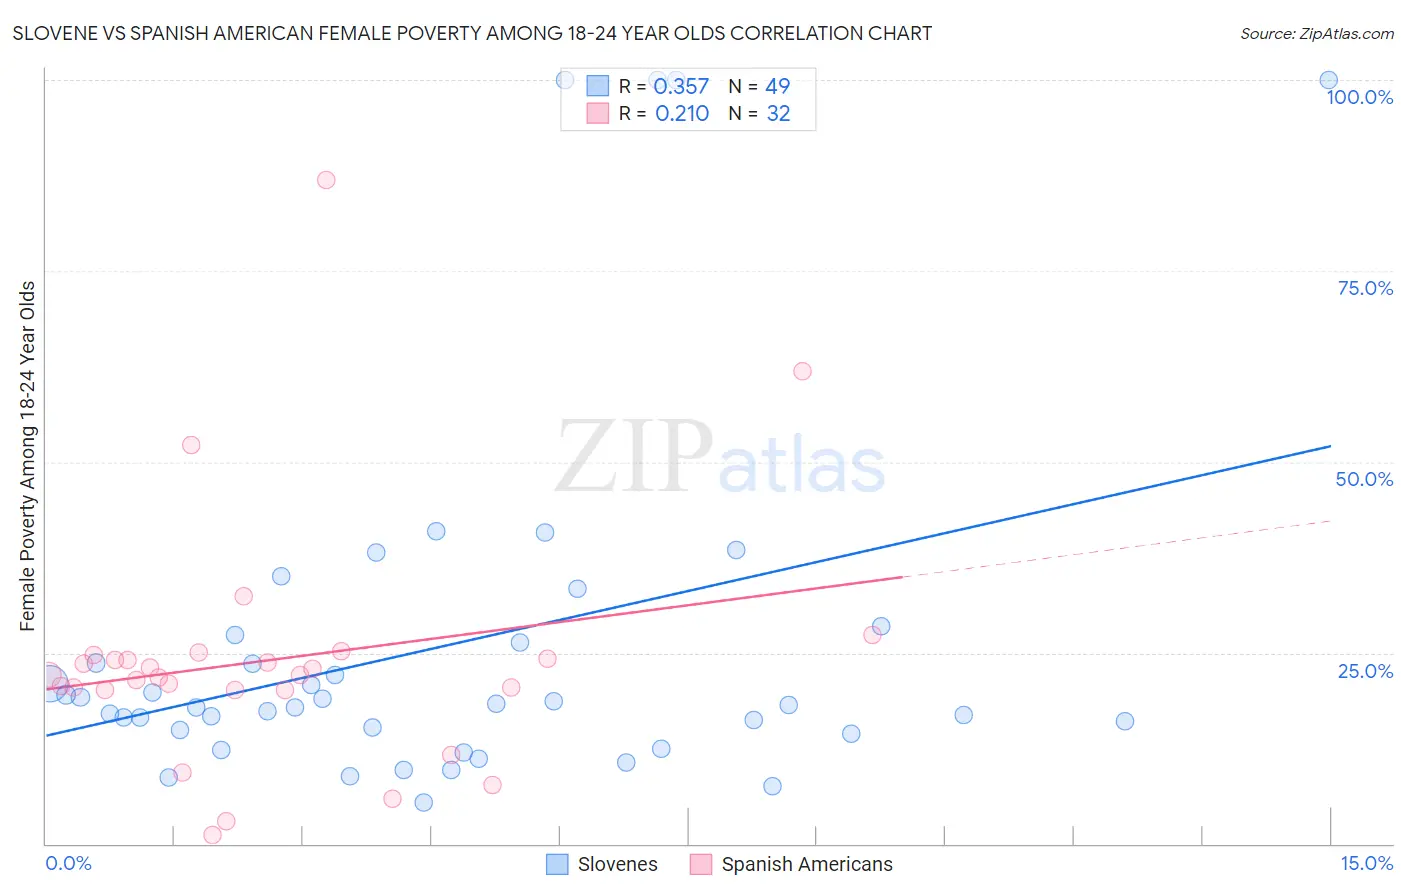 Slovene vs Spanish American Female Poverty Among 18-24 Year Olds